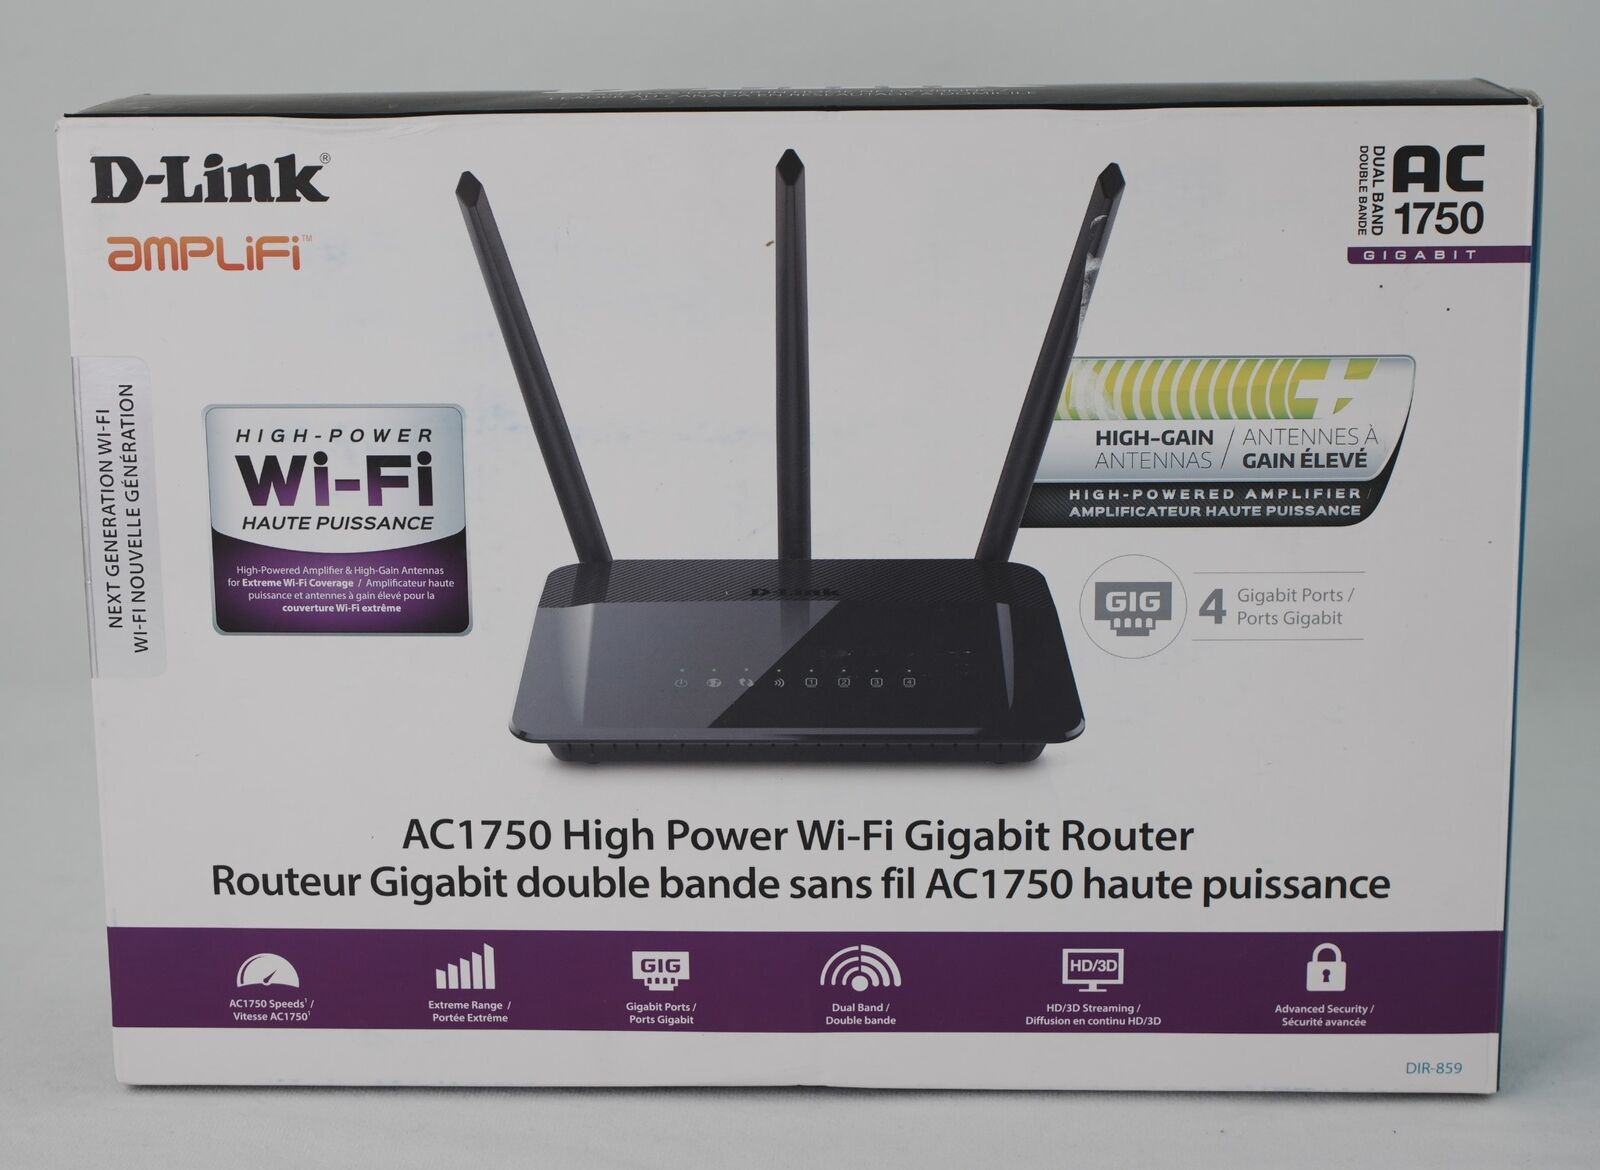 D-Link WiFi Router AC1750 Dir-859 Smart Internet Network System High Speed Dual